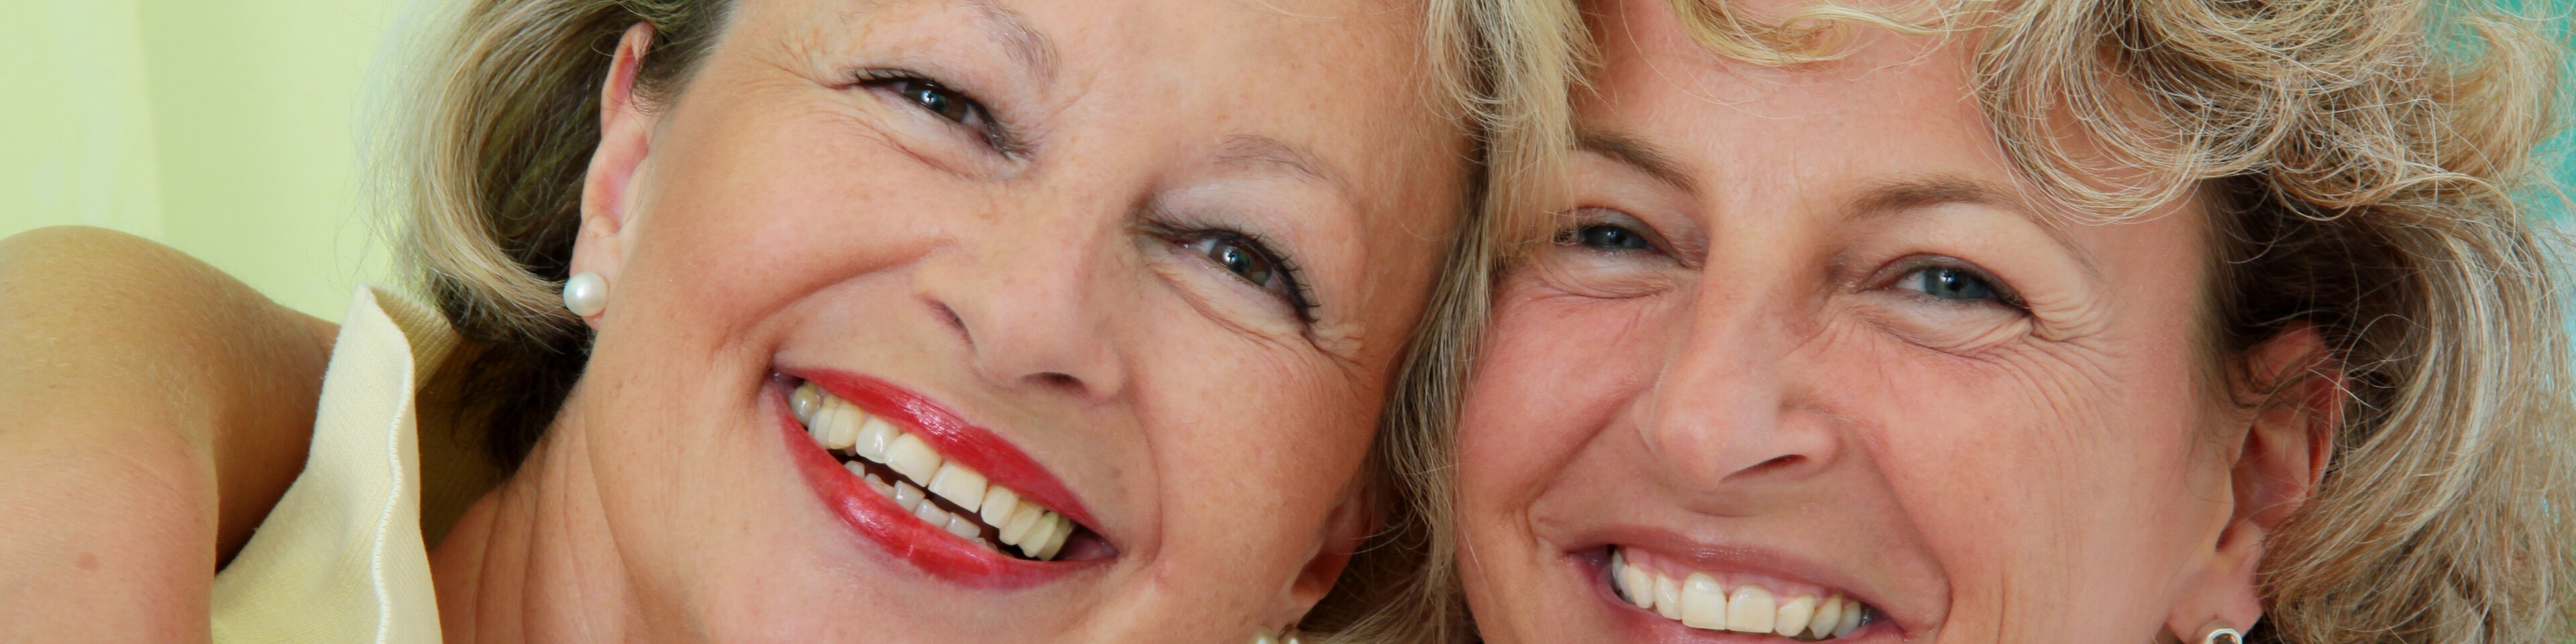 Zwei Frauen lachen in die Kamera | © wildworx - Fotolia